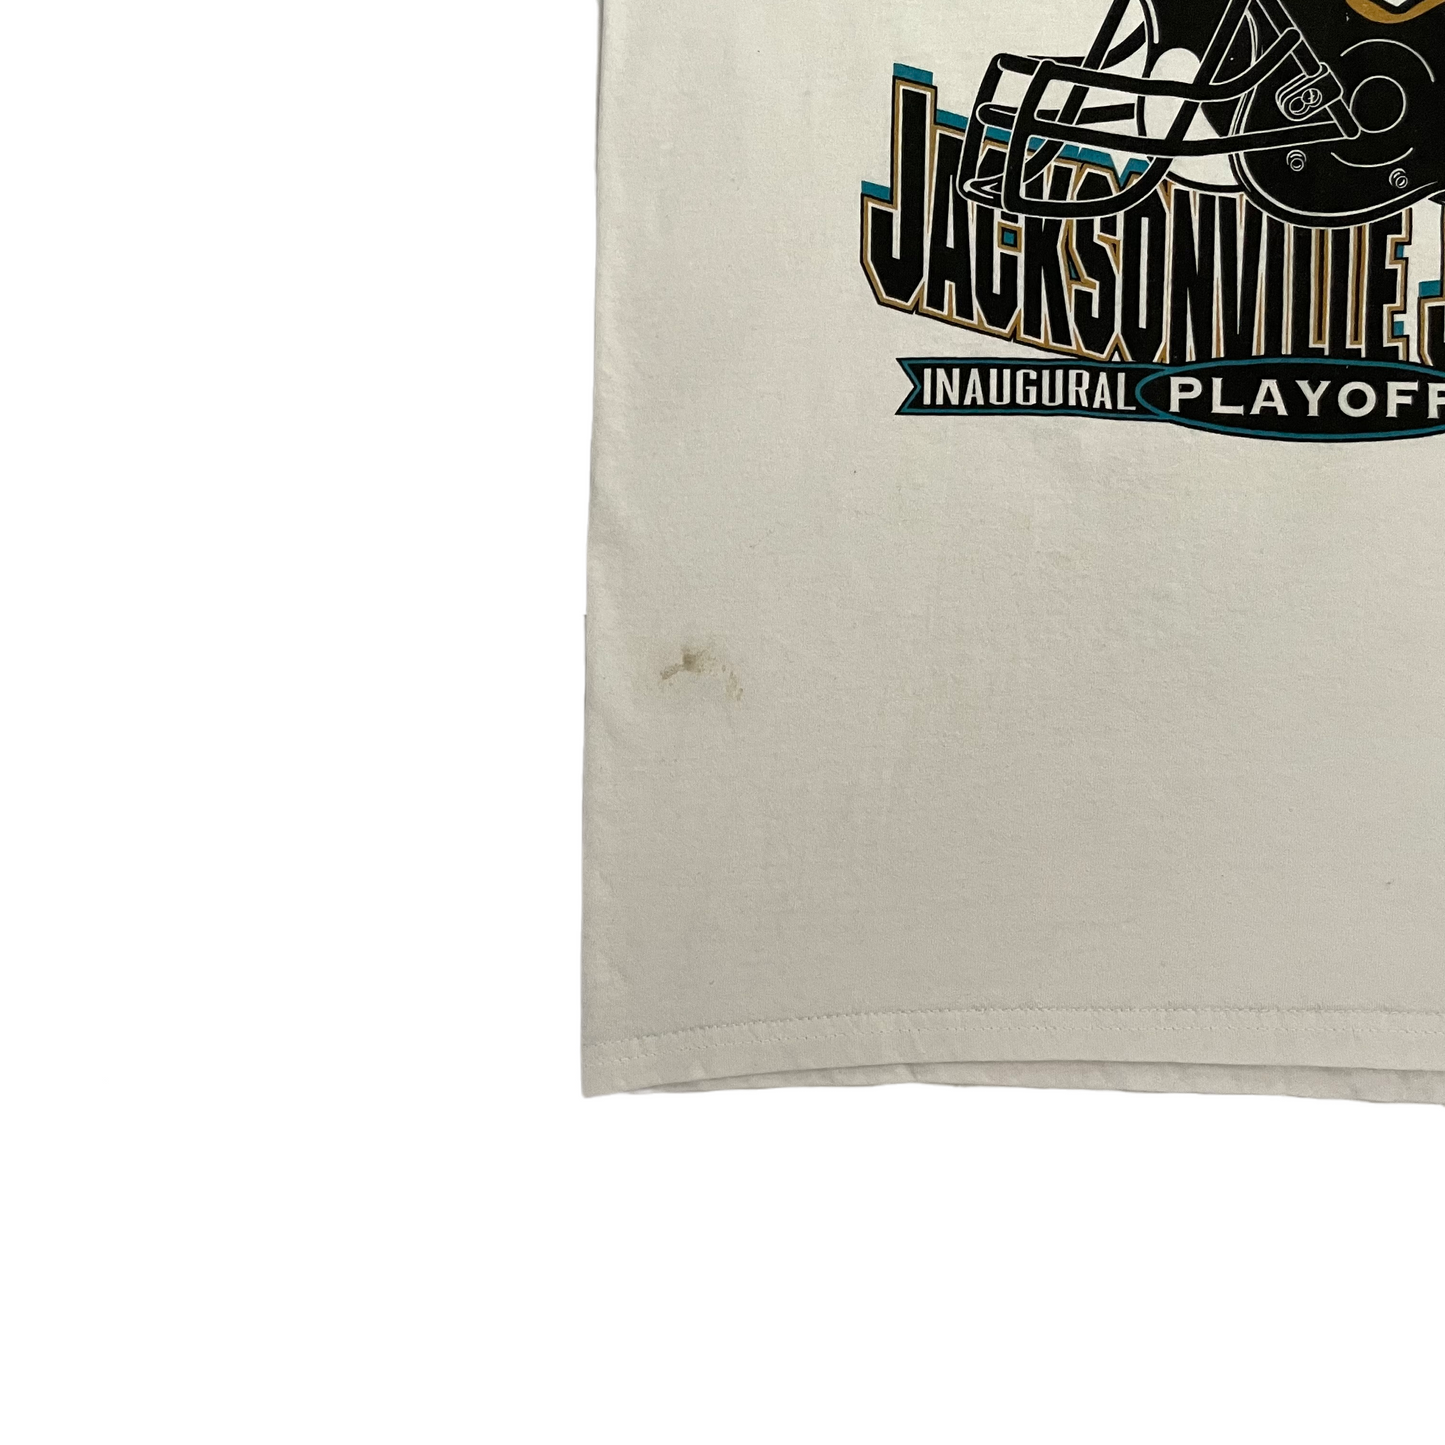 Jacksonville Jaguars 1996 AFC Championship shirt